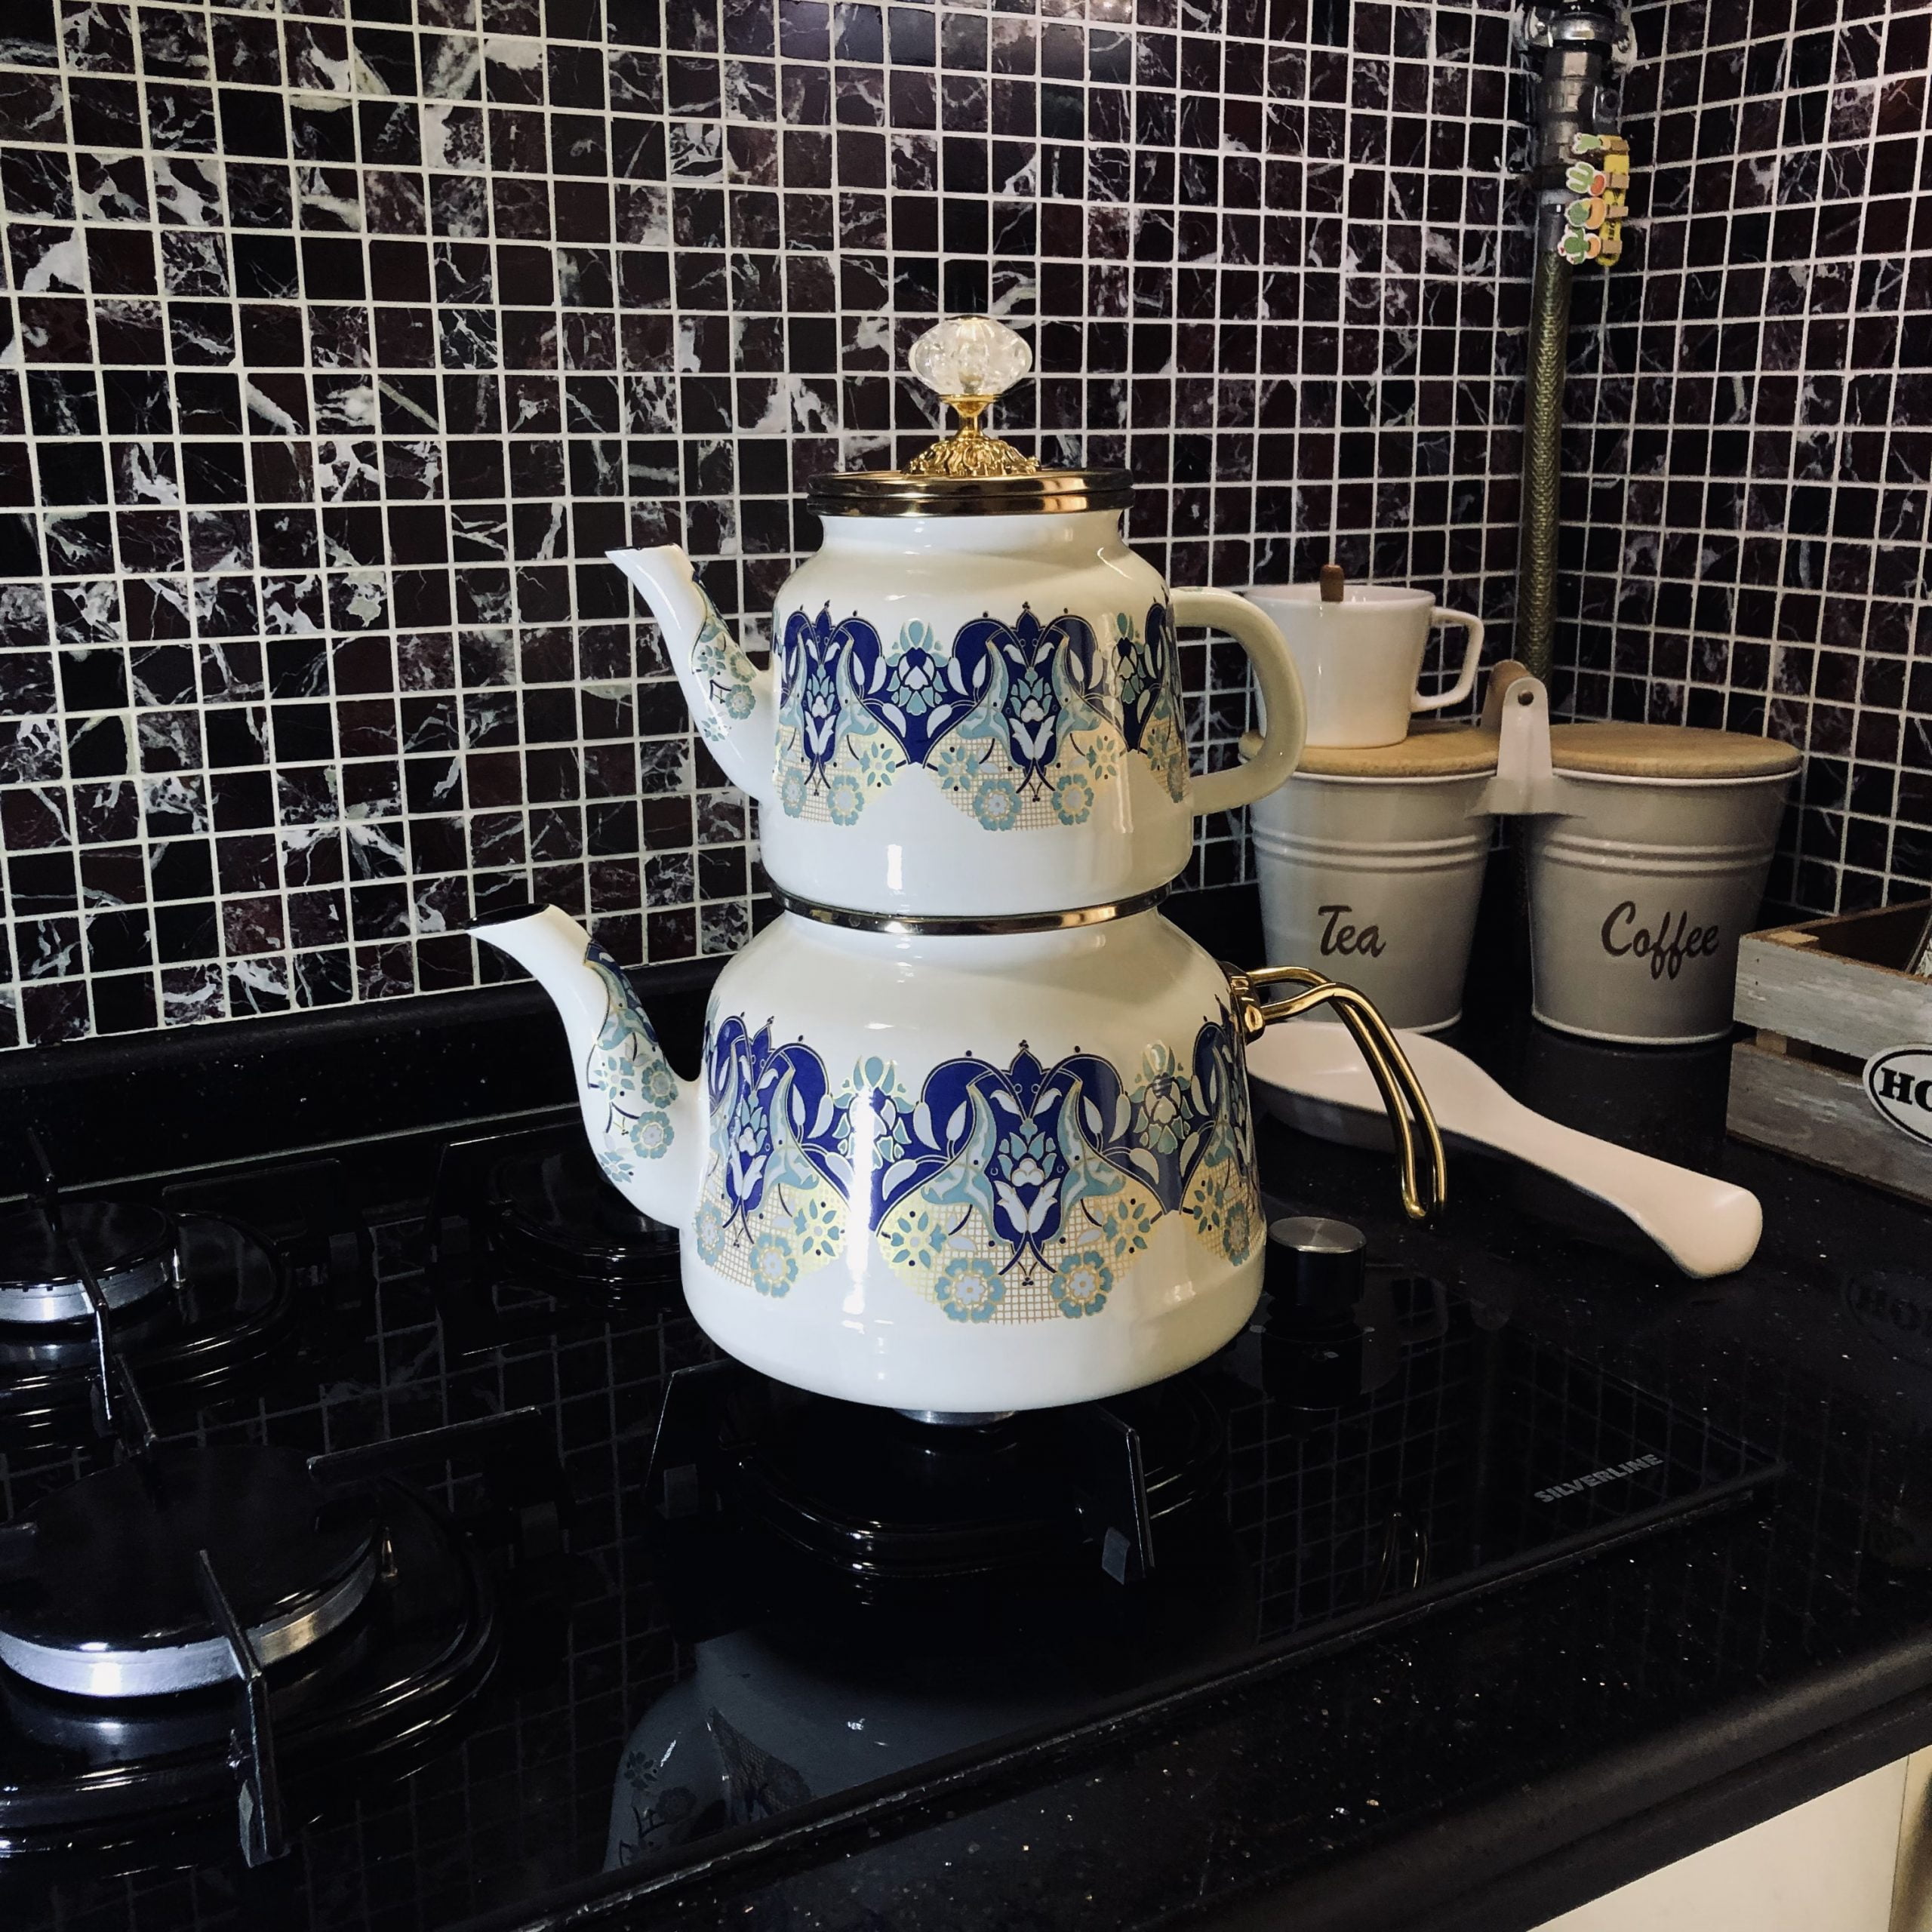 Blue Color Glory Enamel Turkish Tea Pot Kettle, Turkish Teapot